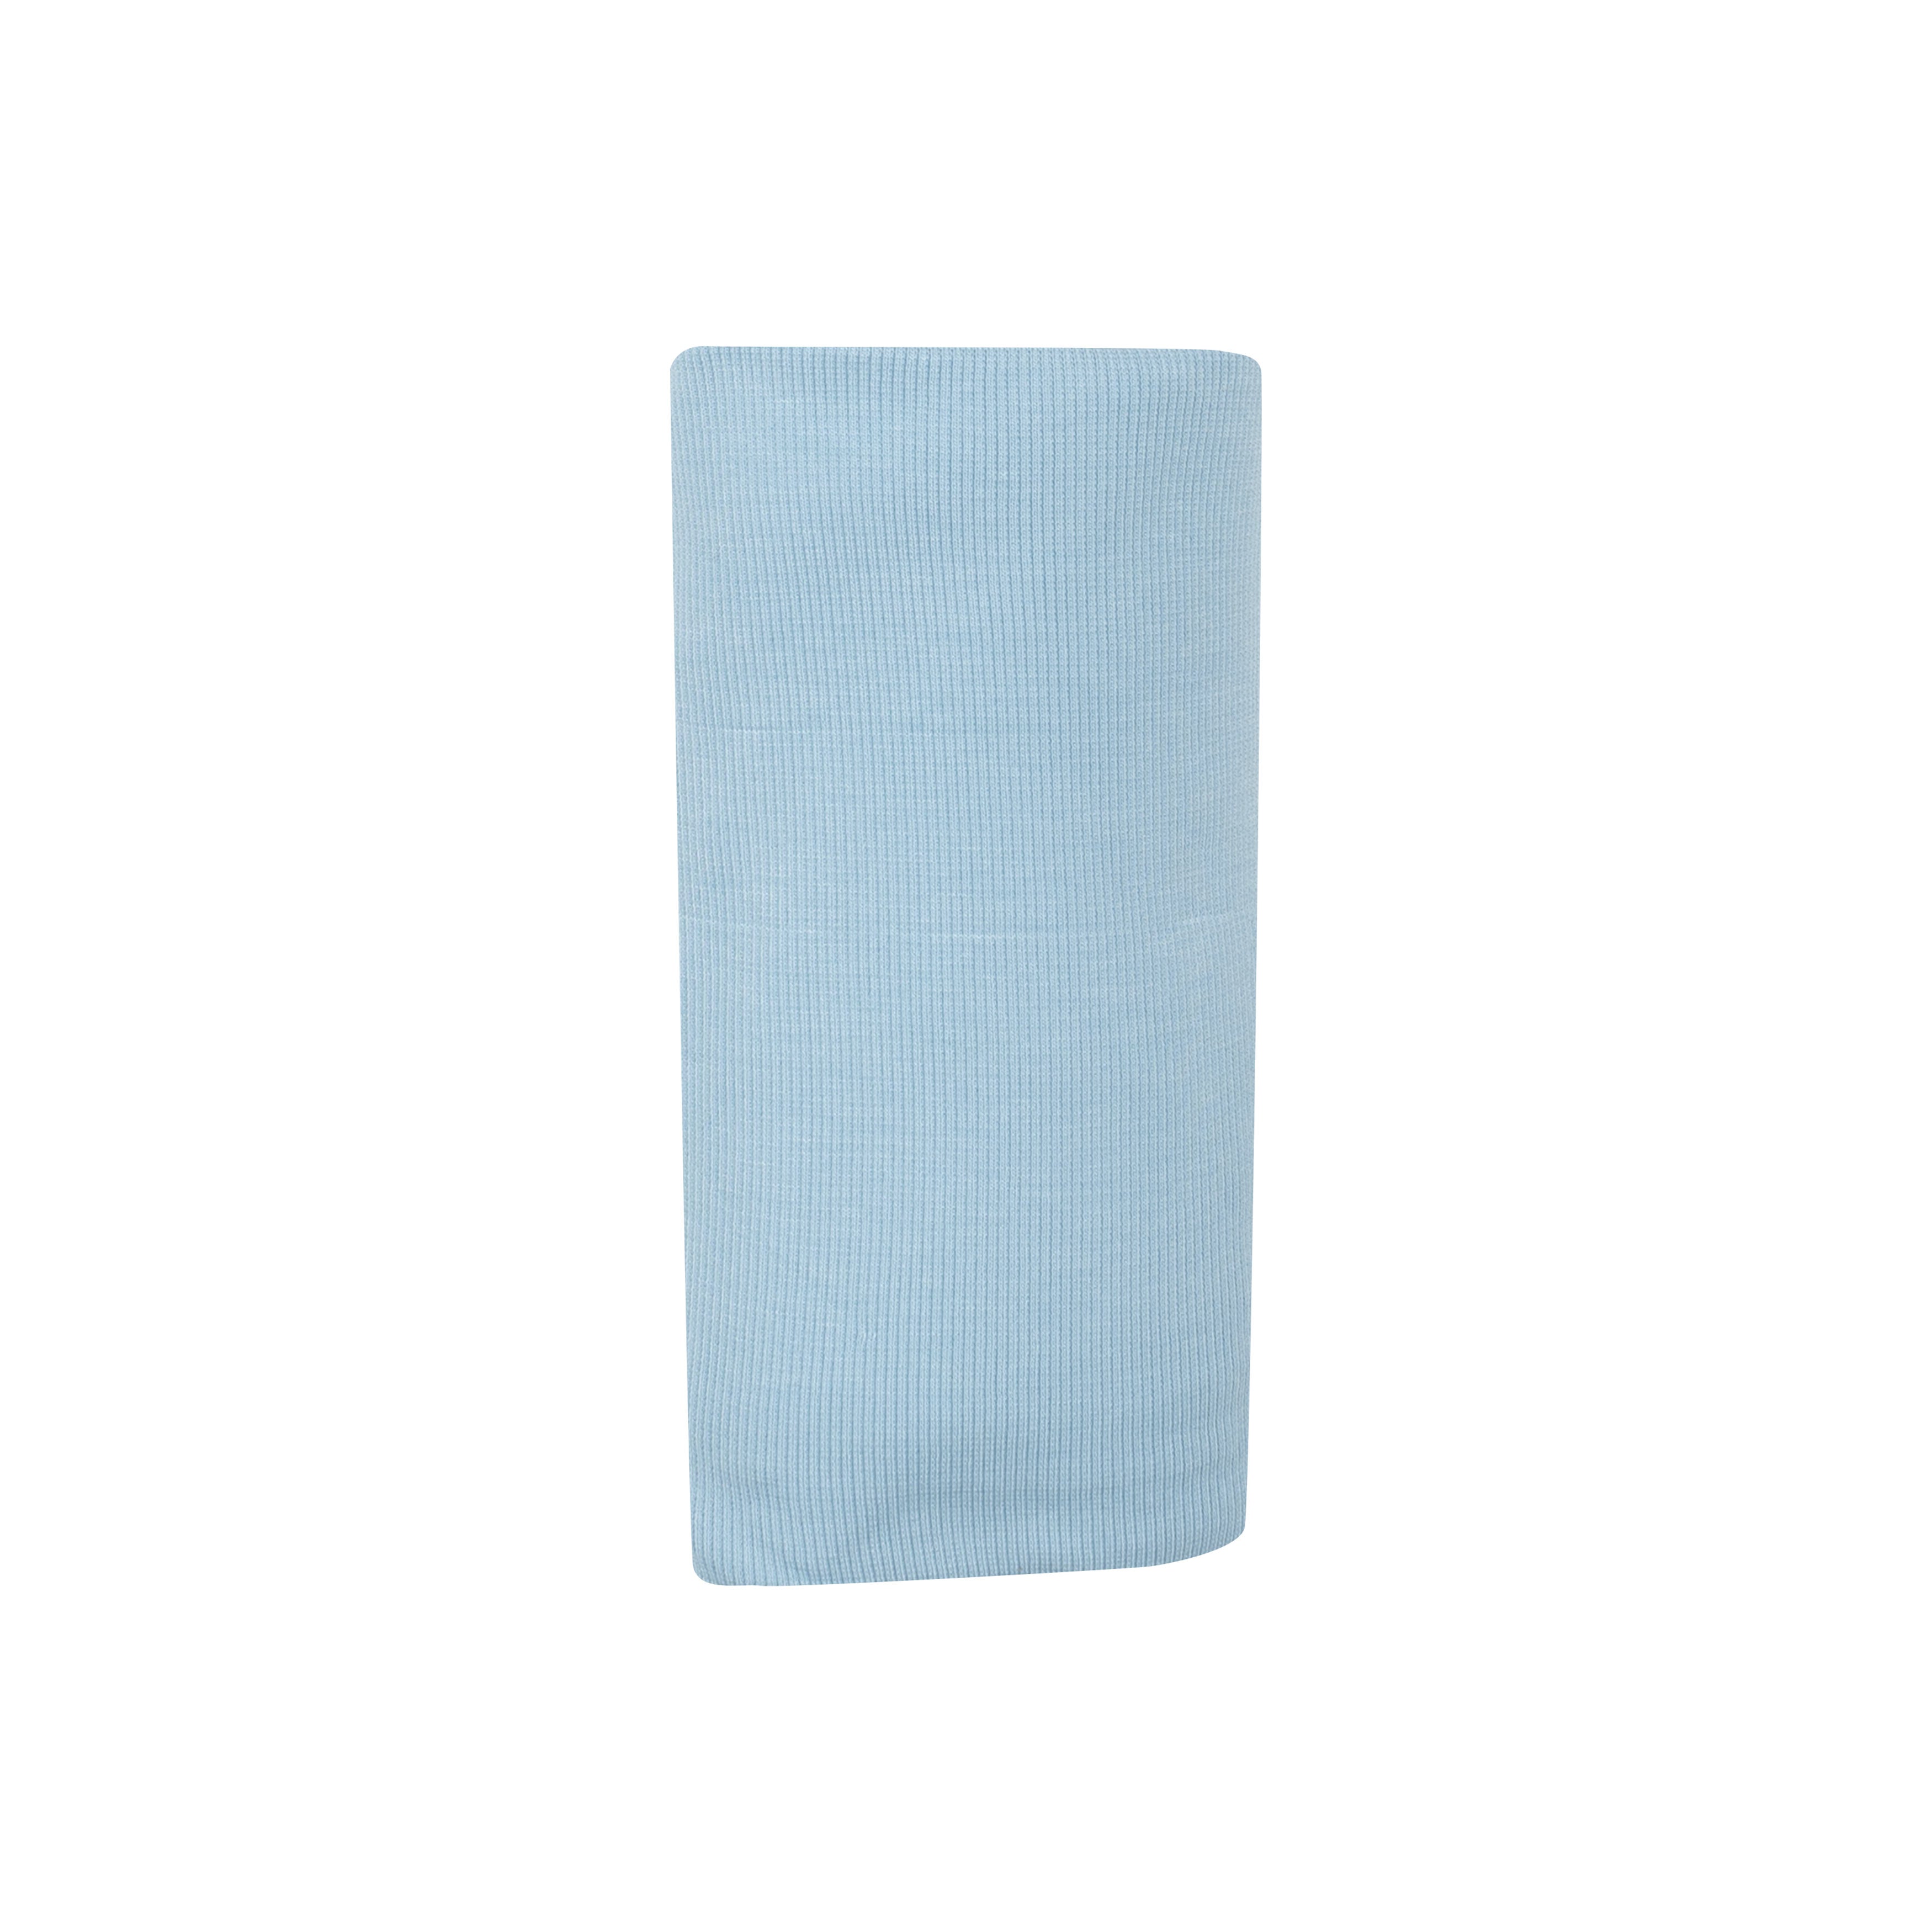 Rib Swaddle Blanket - Dream Blue Rib